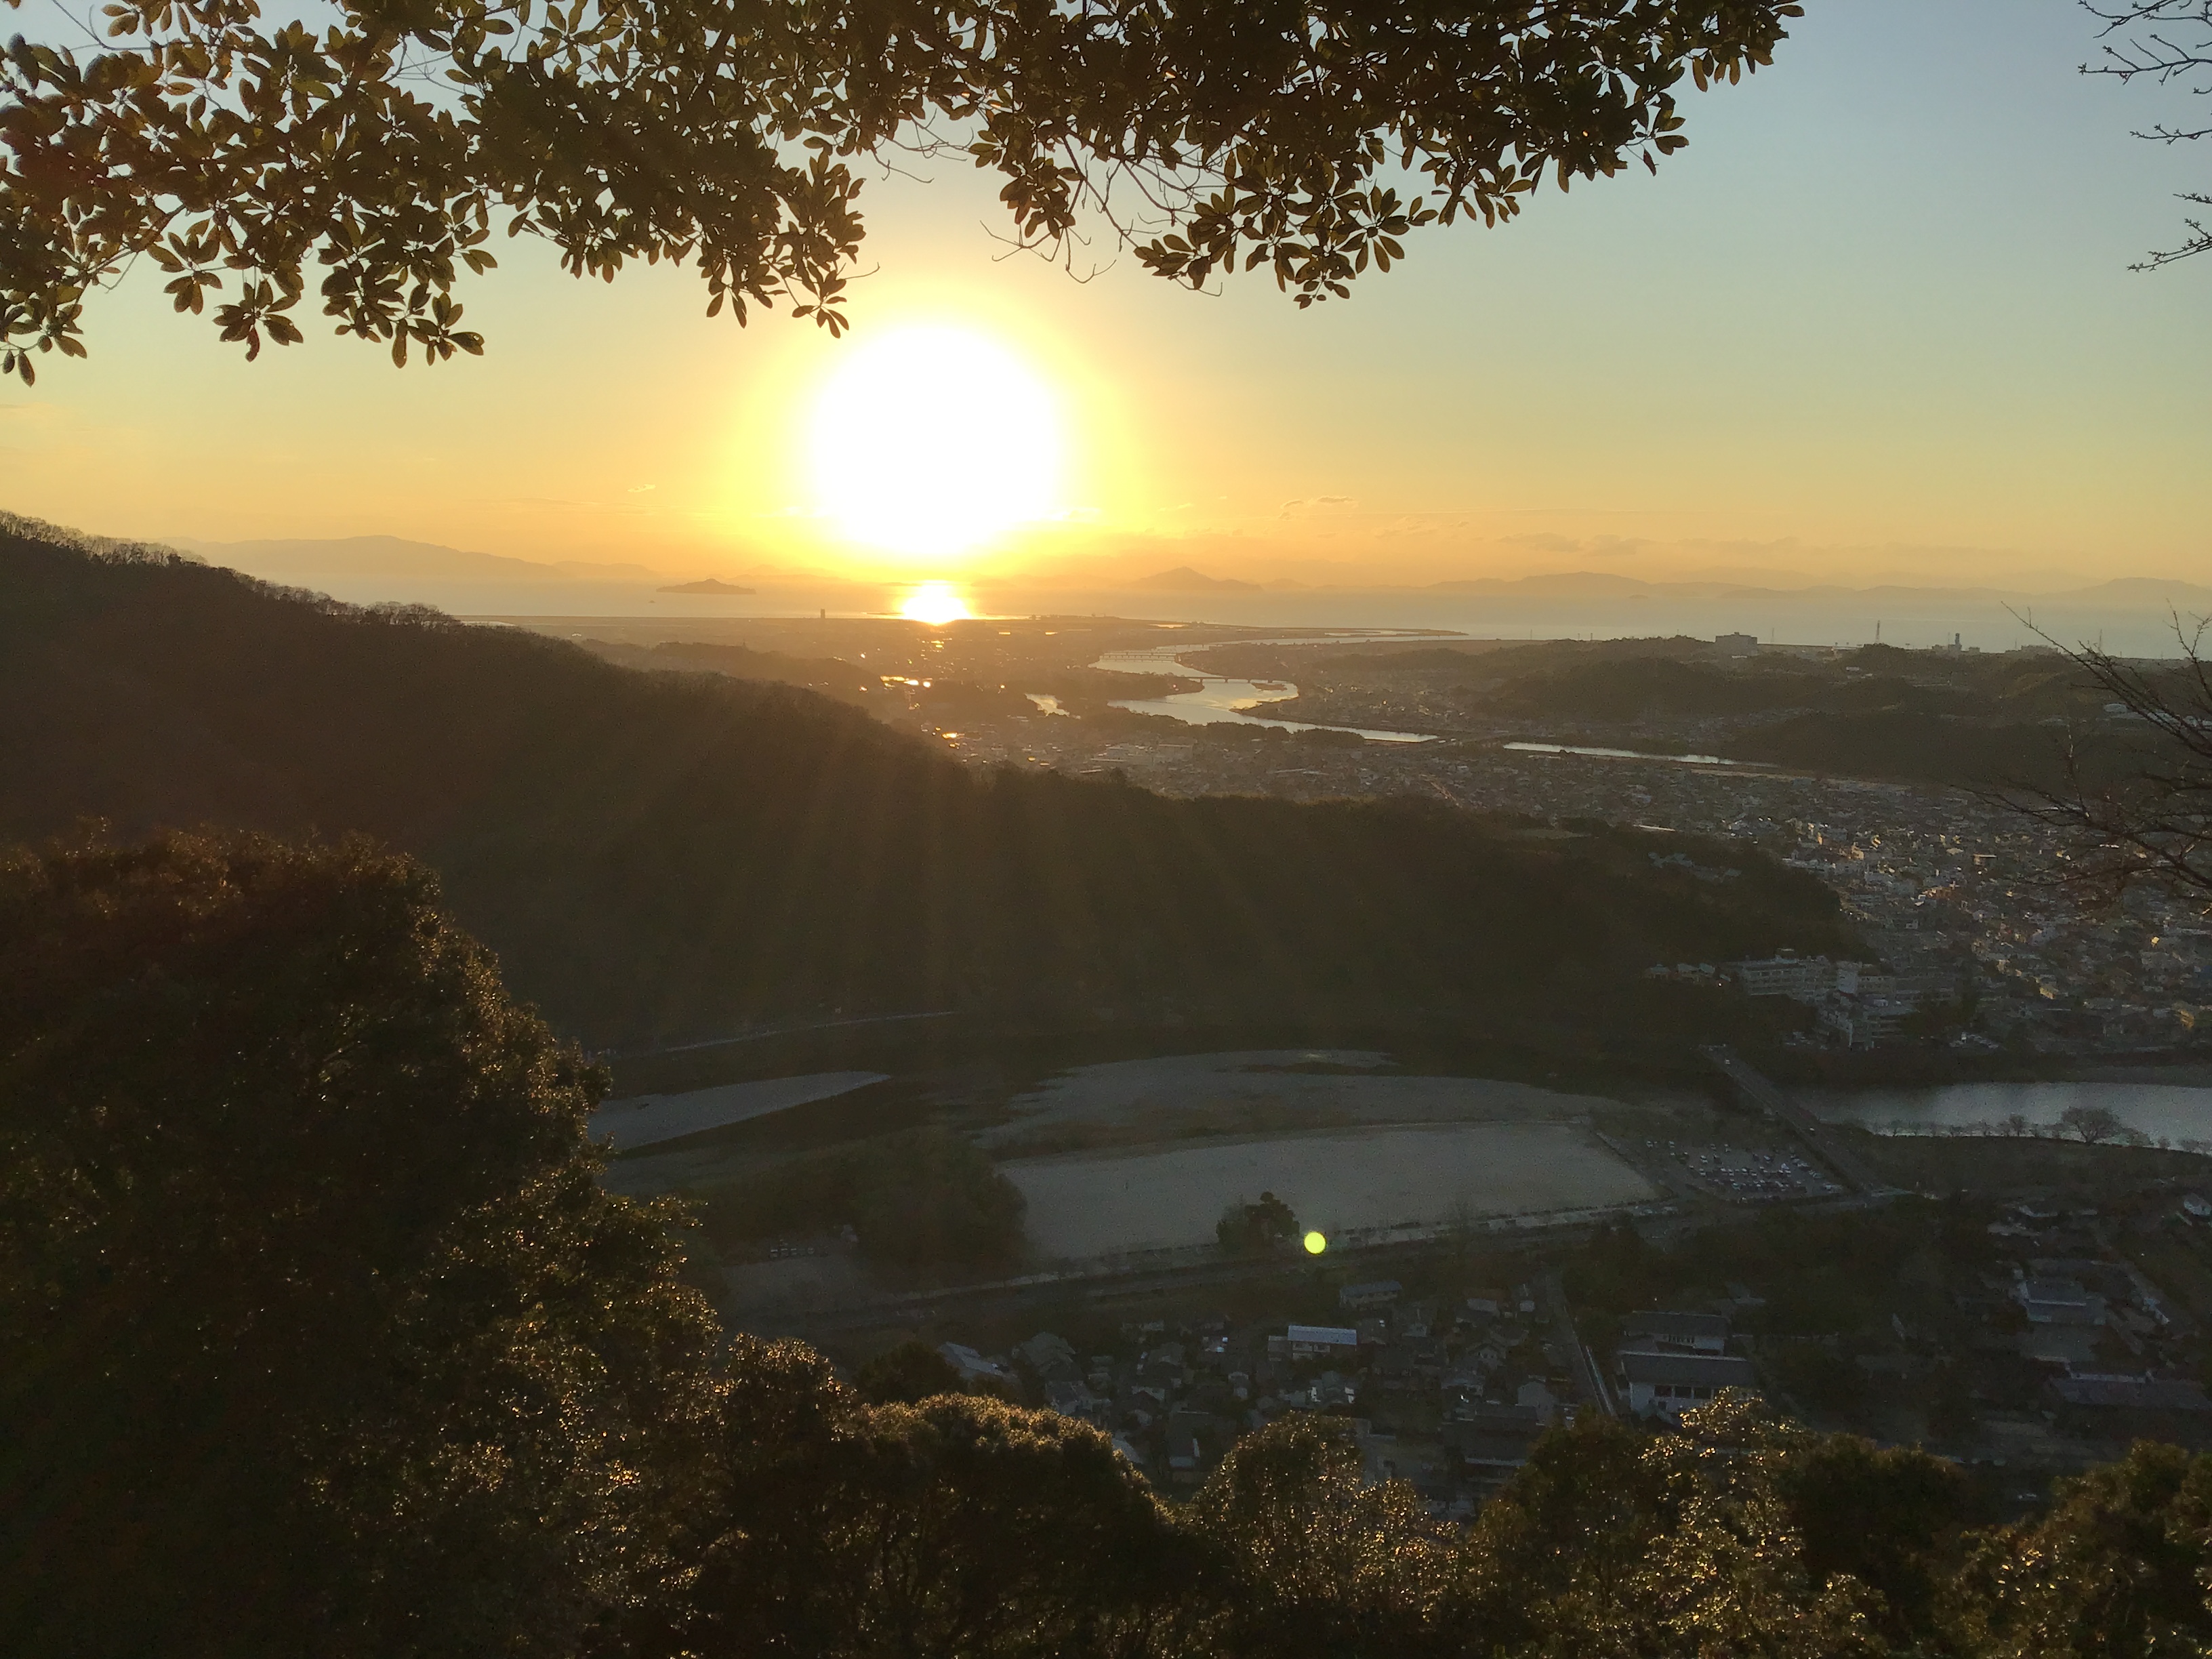 Sunrise over the town of Iwakuni